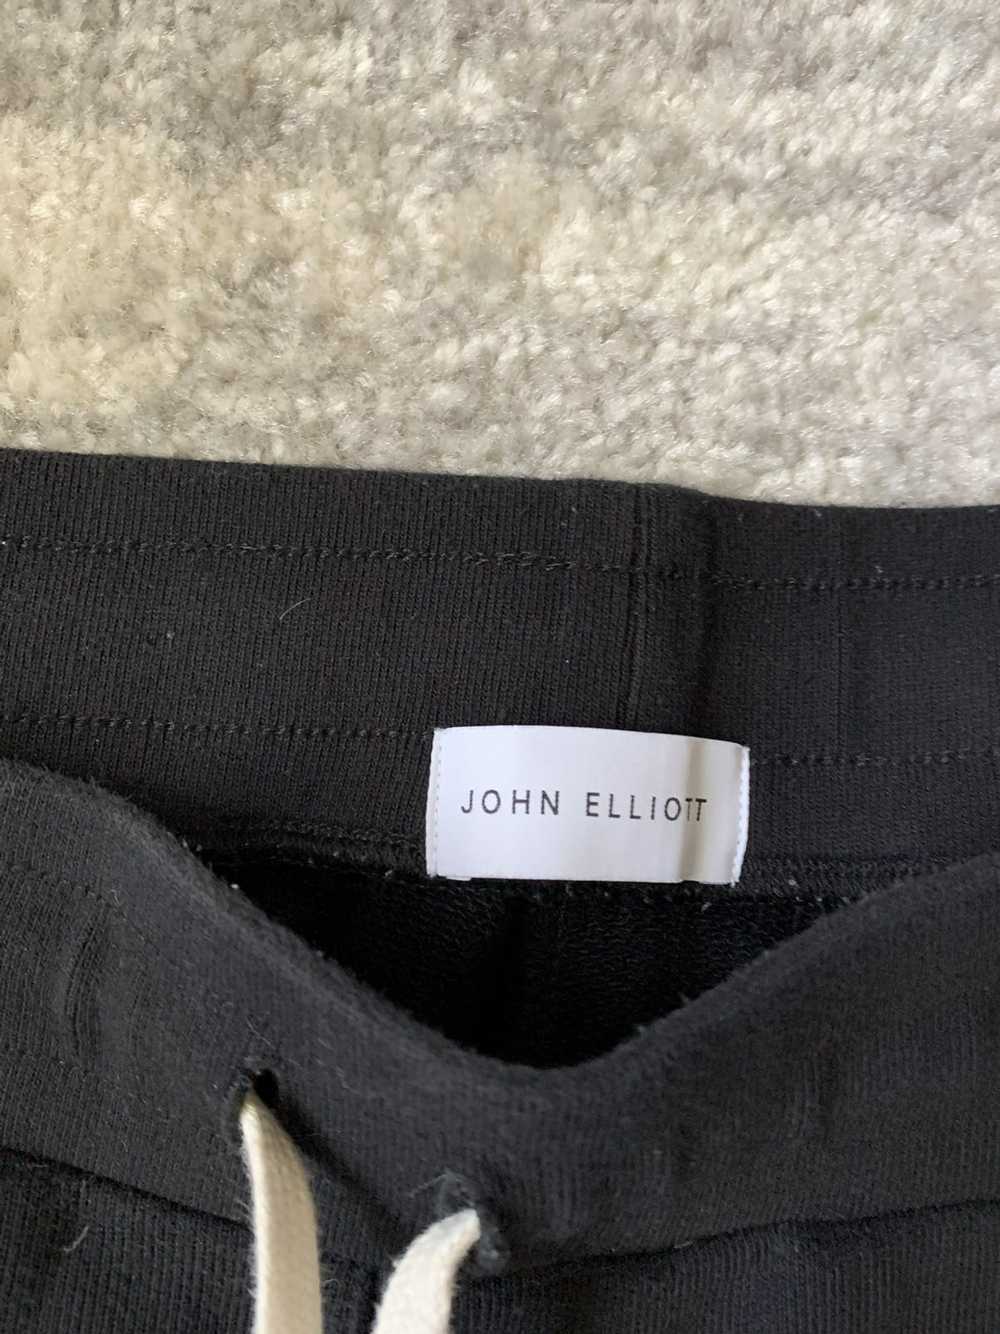 John Elliott Black John Elliot Sweatpants - image 2